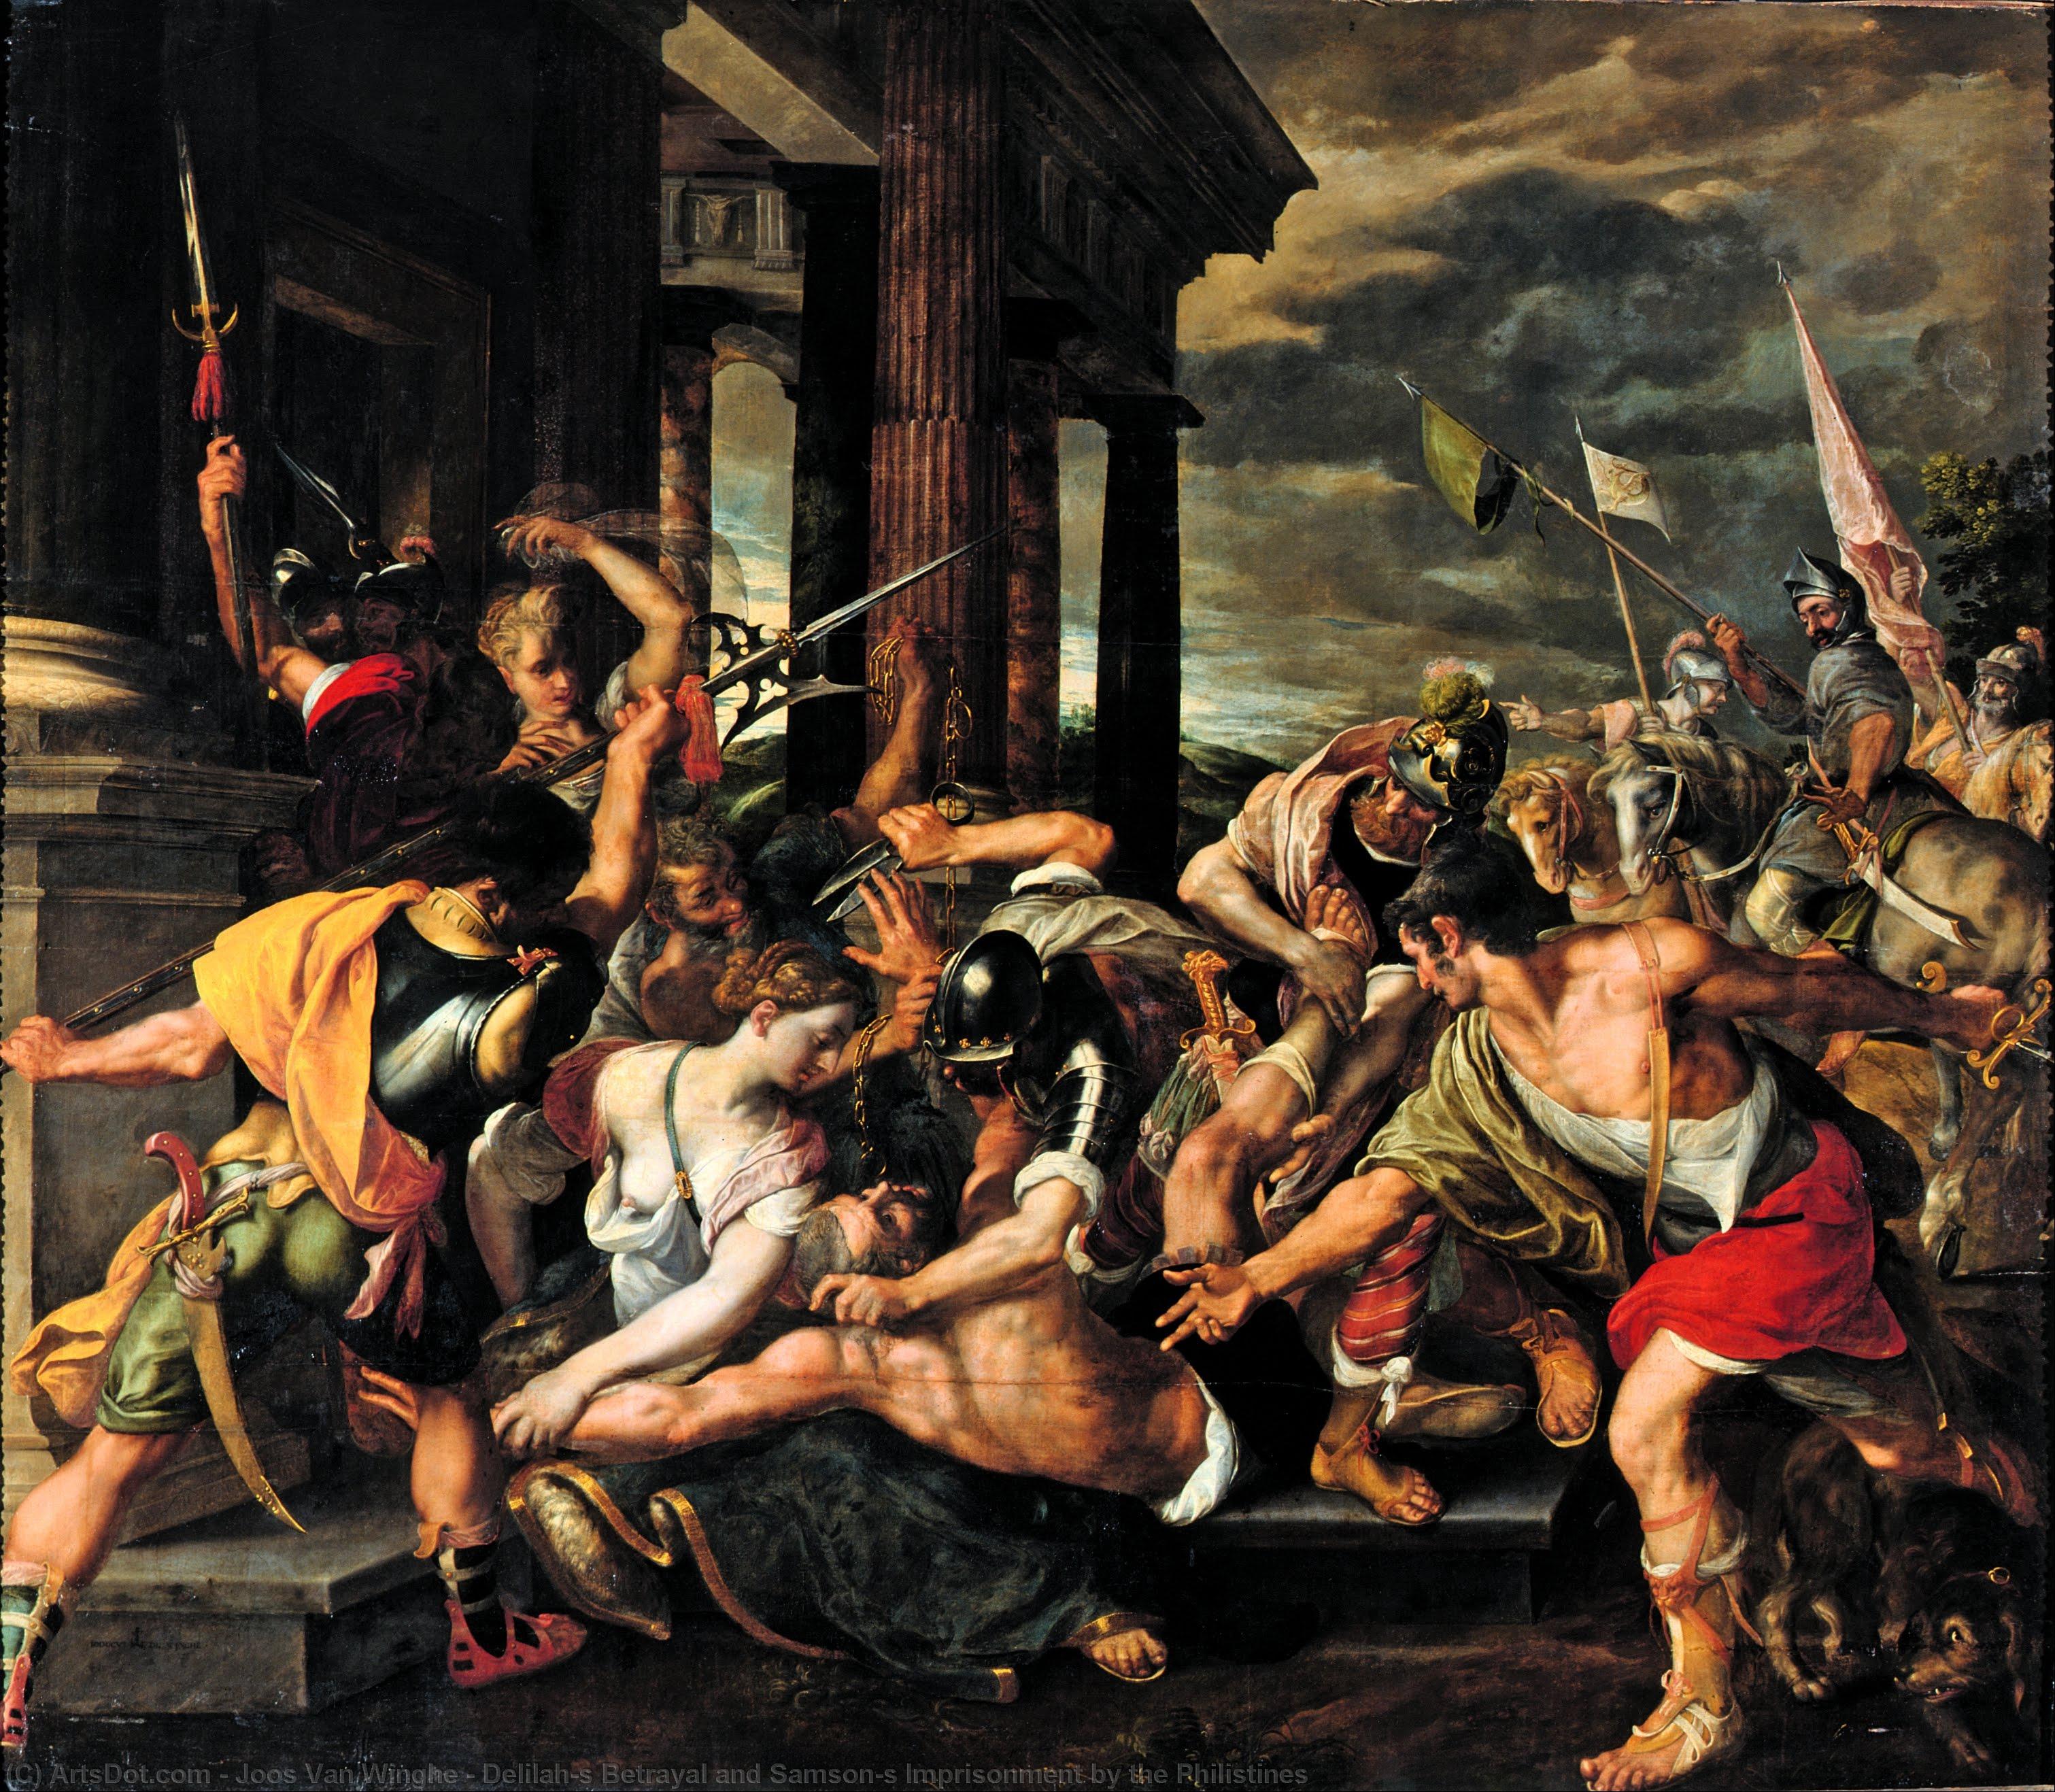 WikiOO.org - Enciclopedia of Fine Arts - Pictura, lucrări de artă Joos Van Winghe - Delilah’s Betrayal and Samson’s Imprisonment by the Philistines